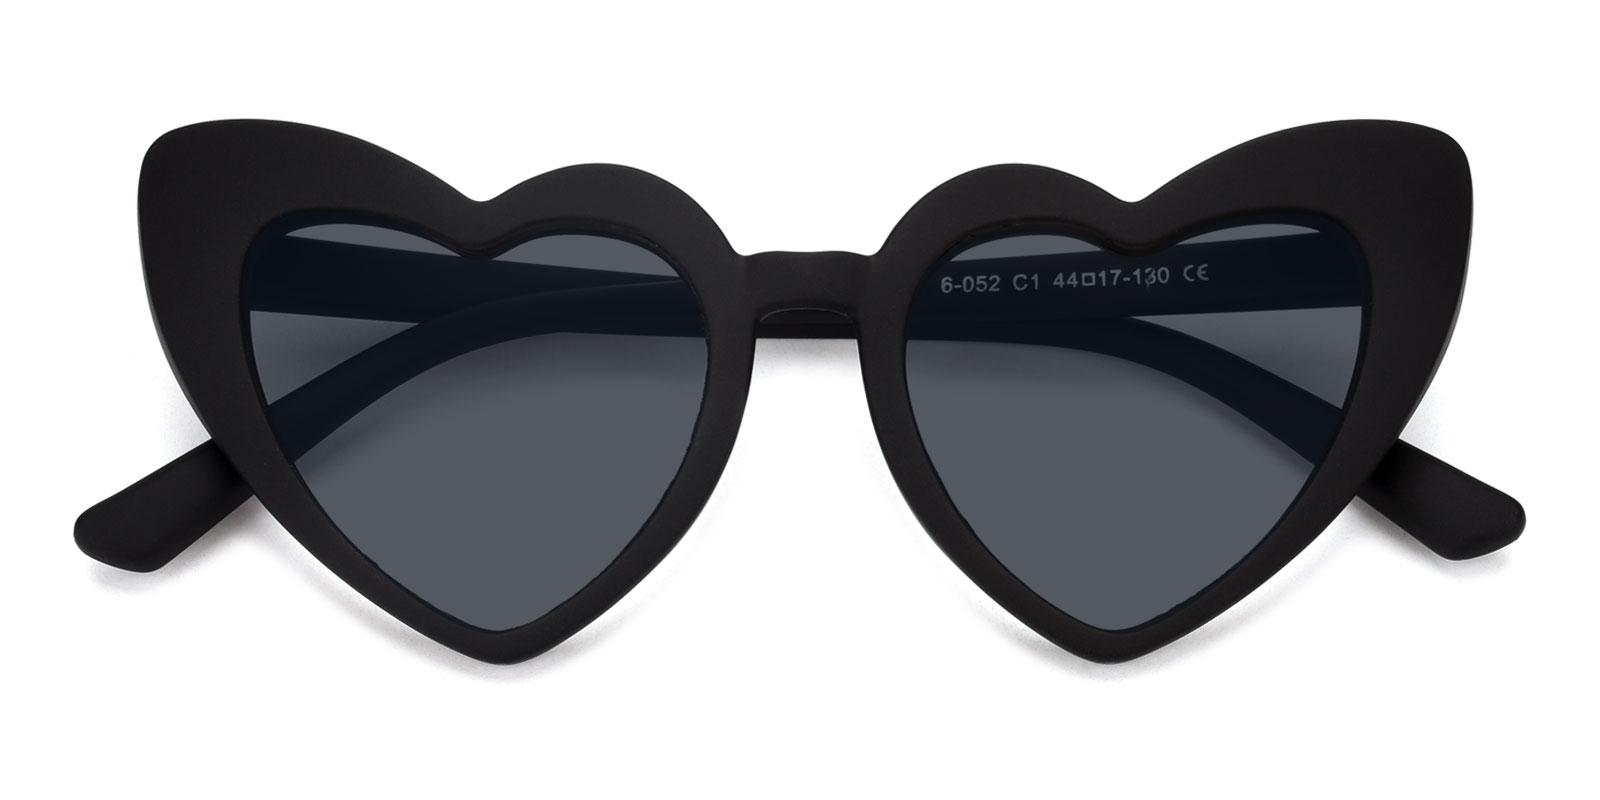 Retta-Black-Geometric-TR-Sunglasses-detail